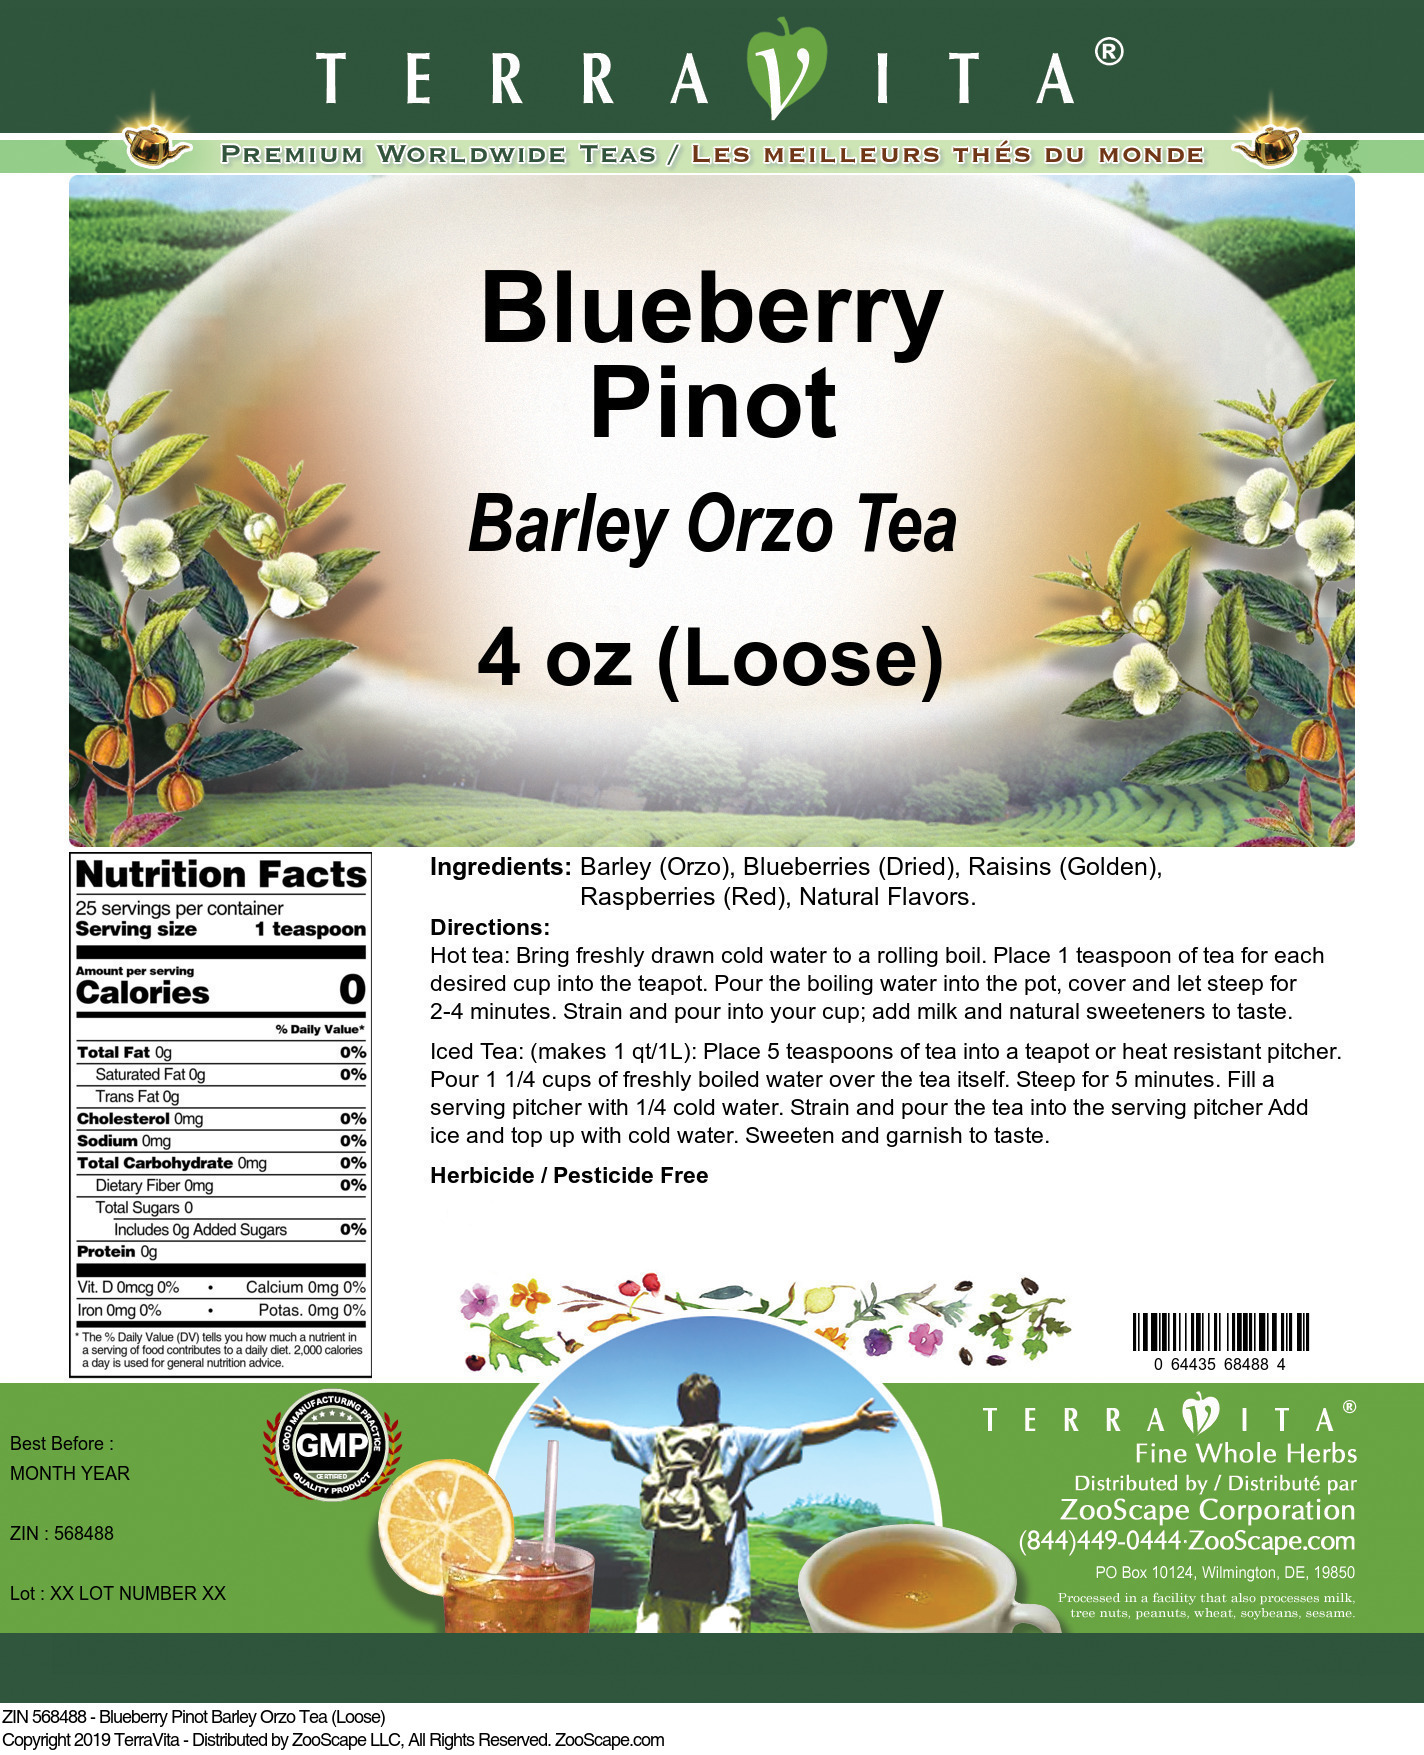 Blueberry Pinot Barley Orzo Tea (Loose) - Label